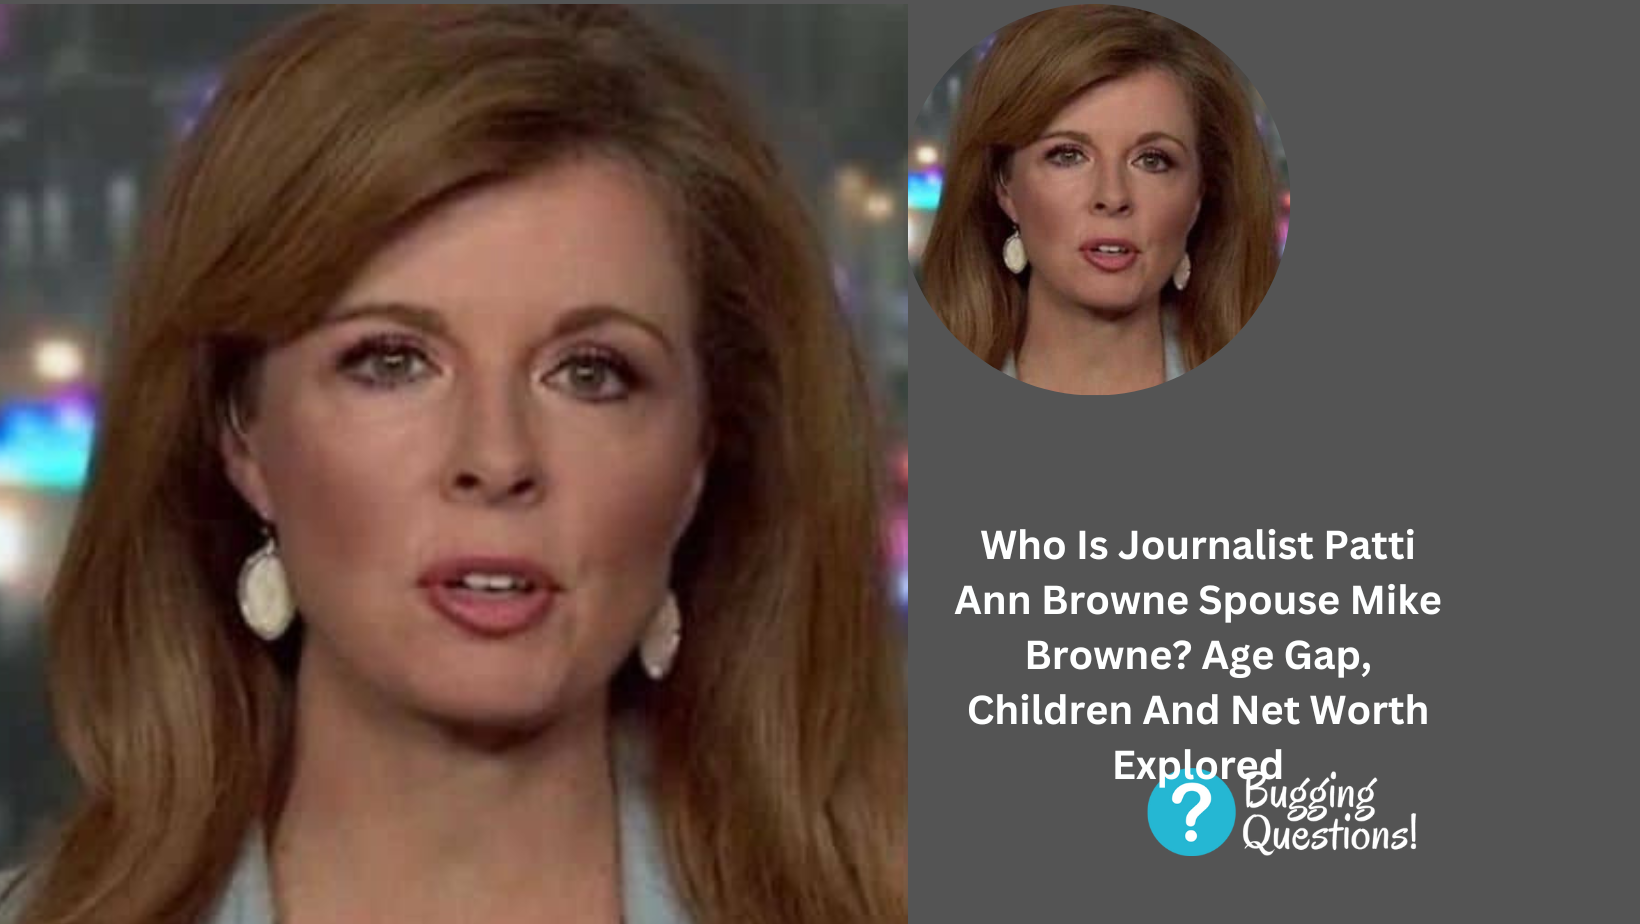 Who Is Journalist Patti Ann Browne Spouse Mike Browne?